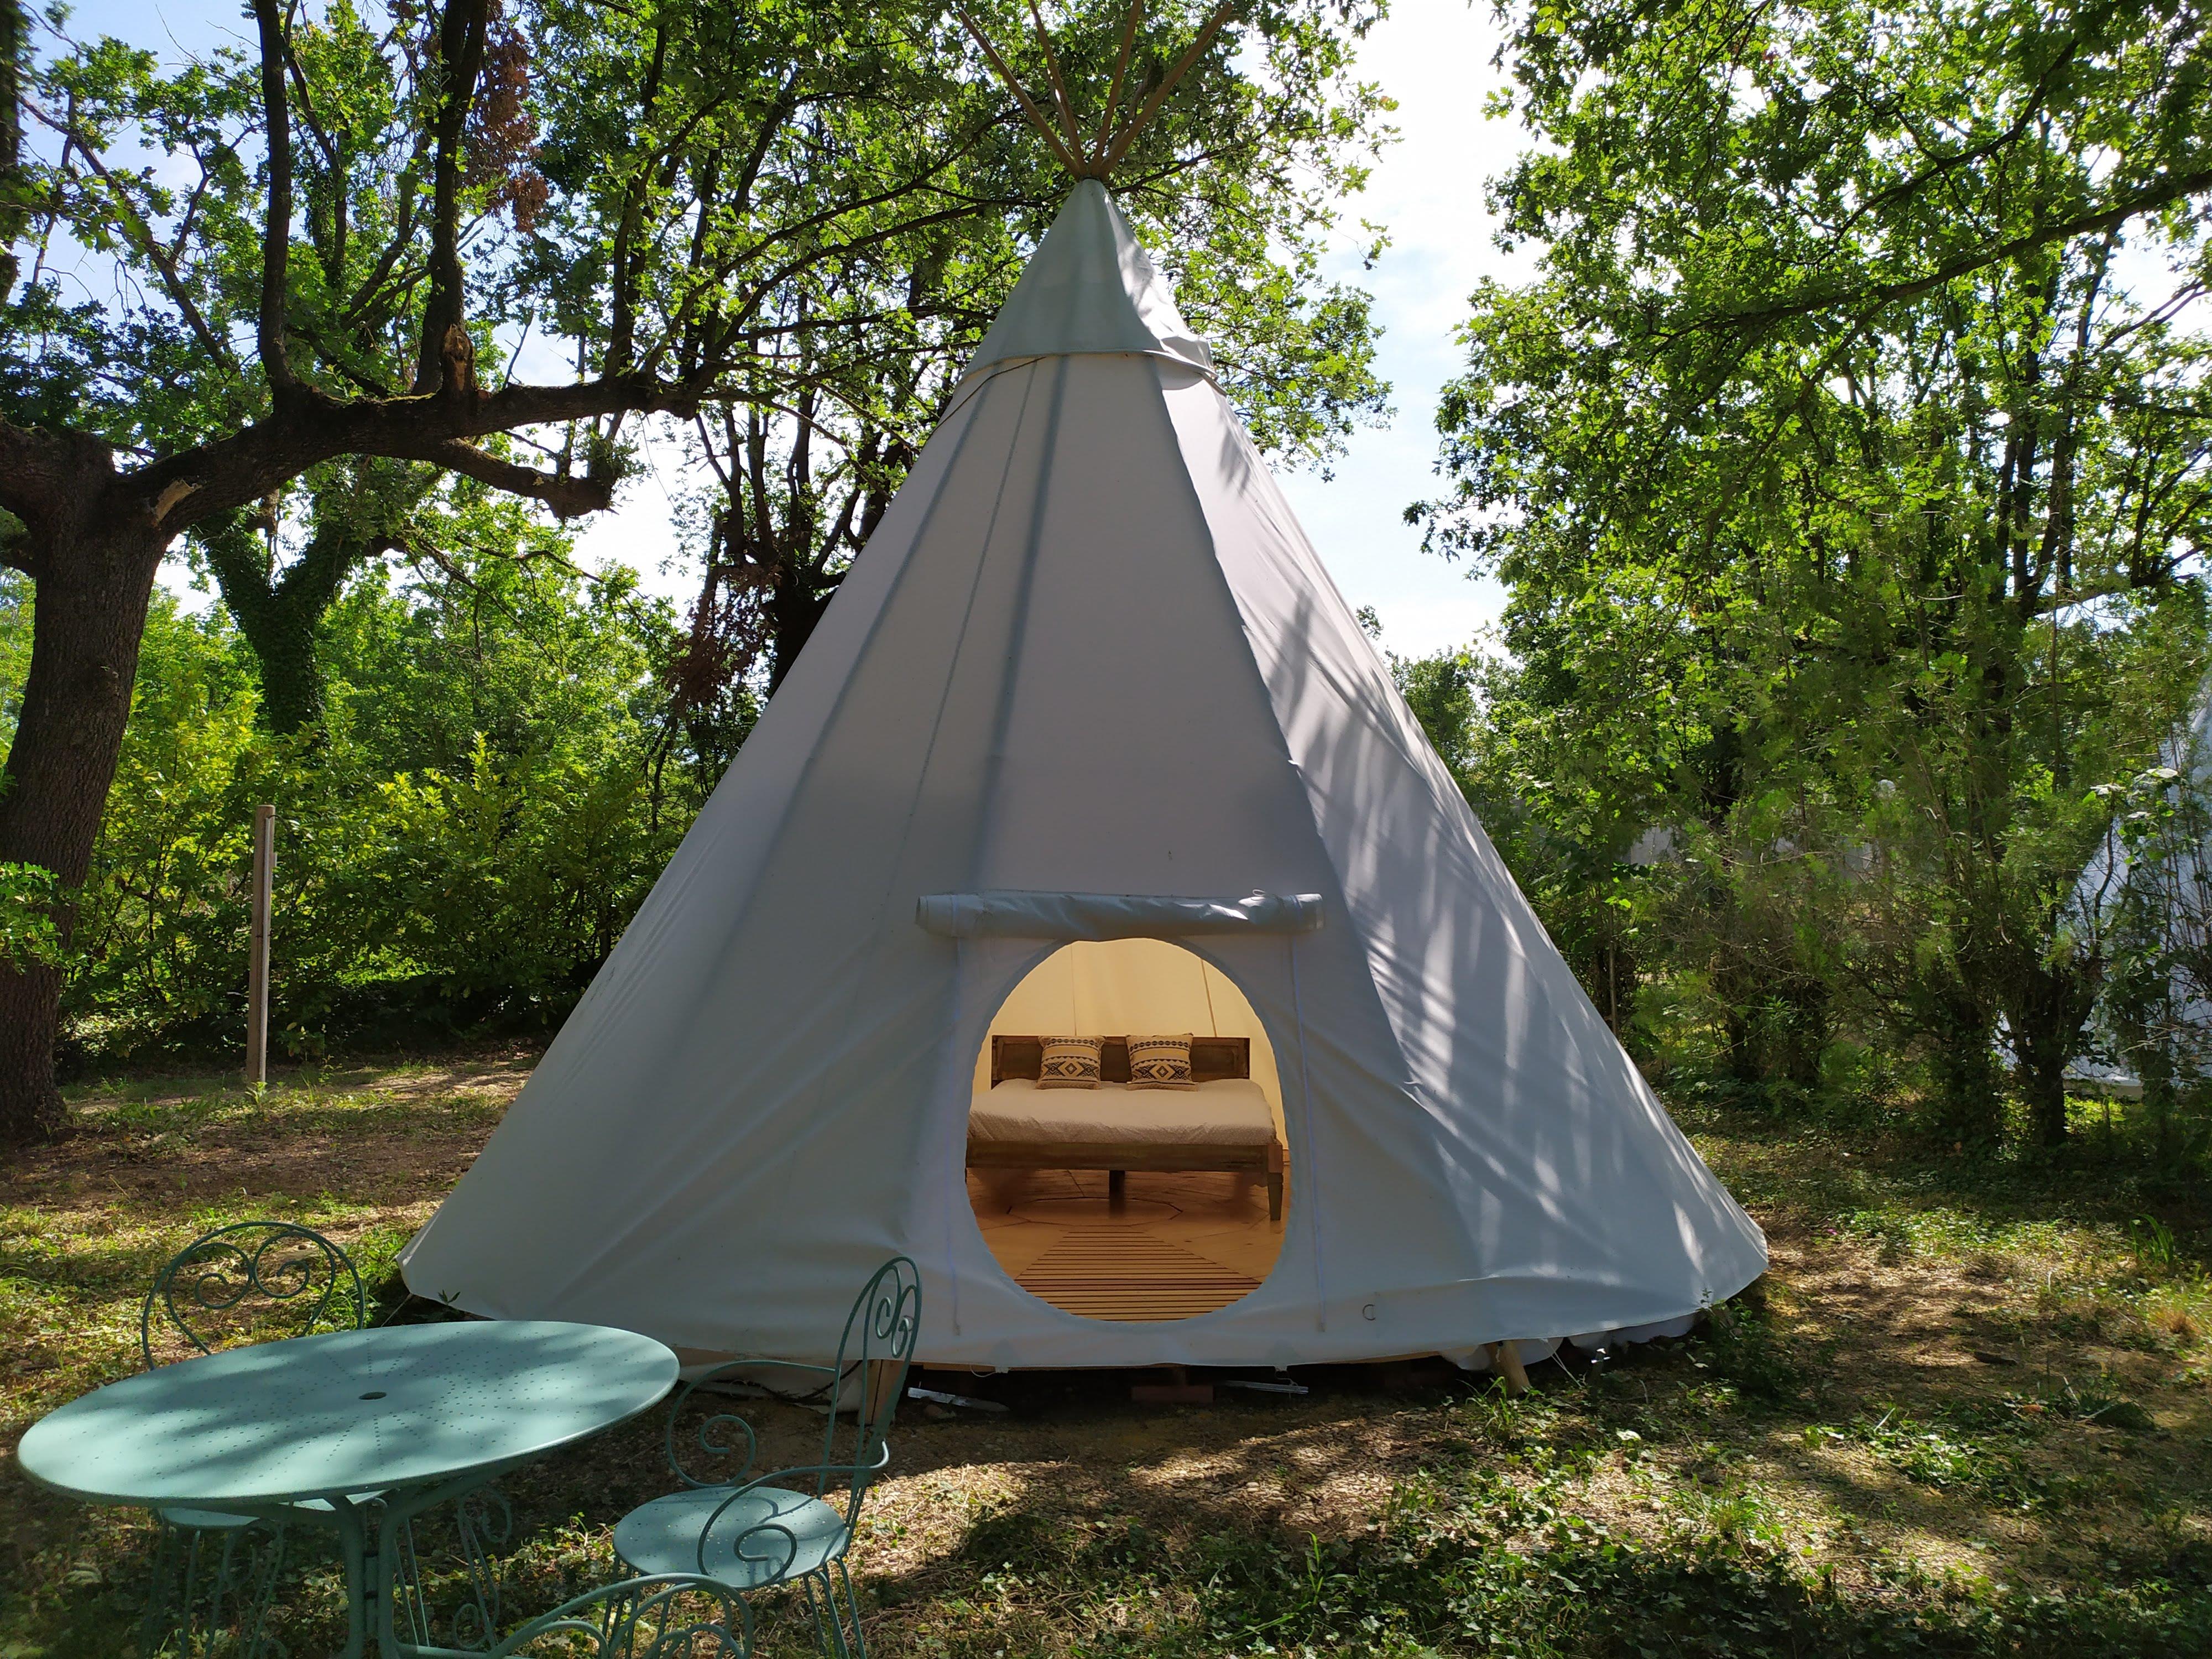 Accommodation - Indian Teepee - Camping du Domaine de Senaud